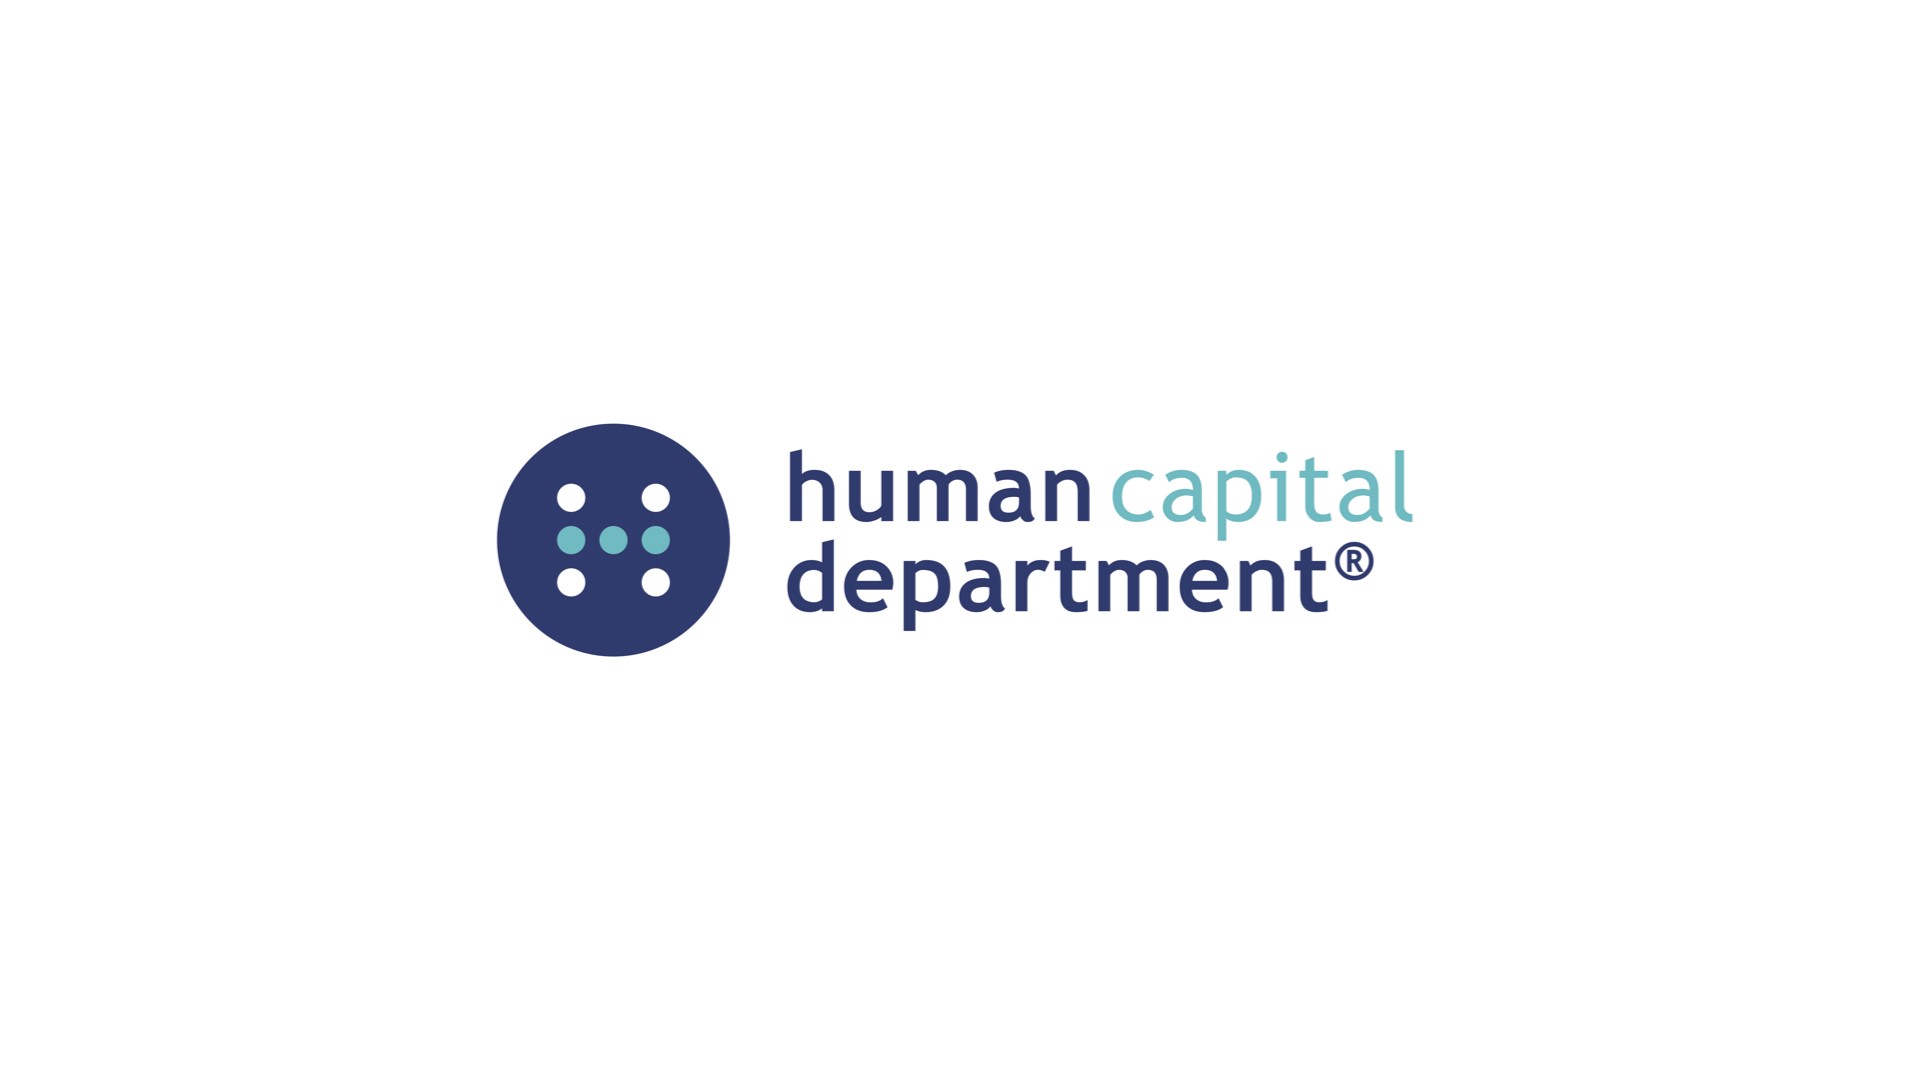 human capital department